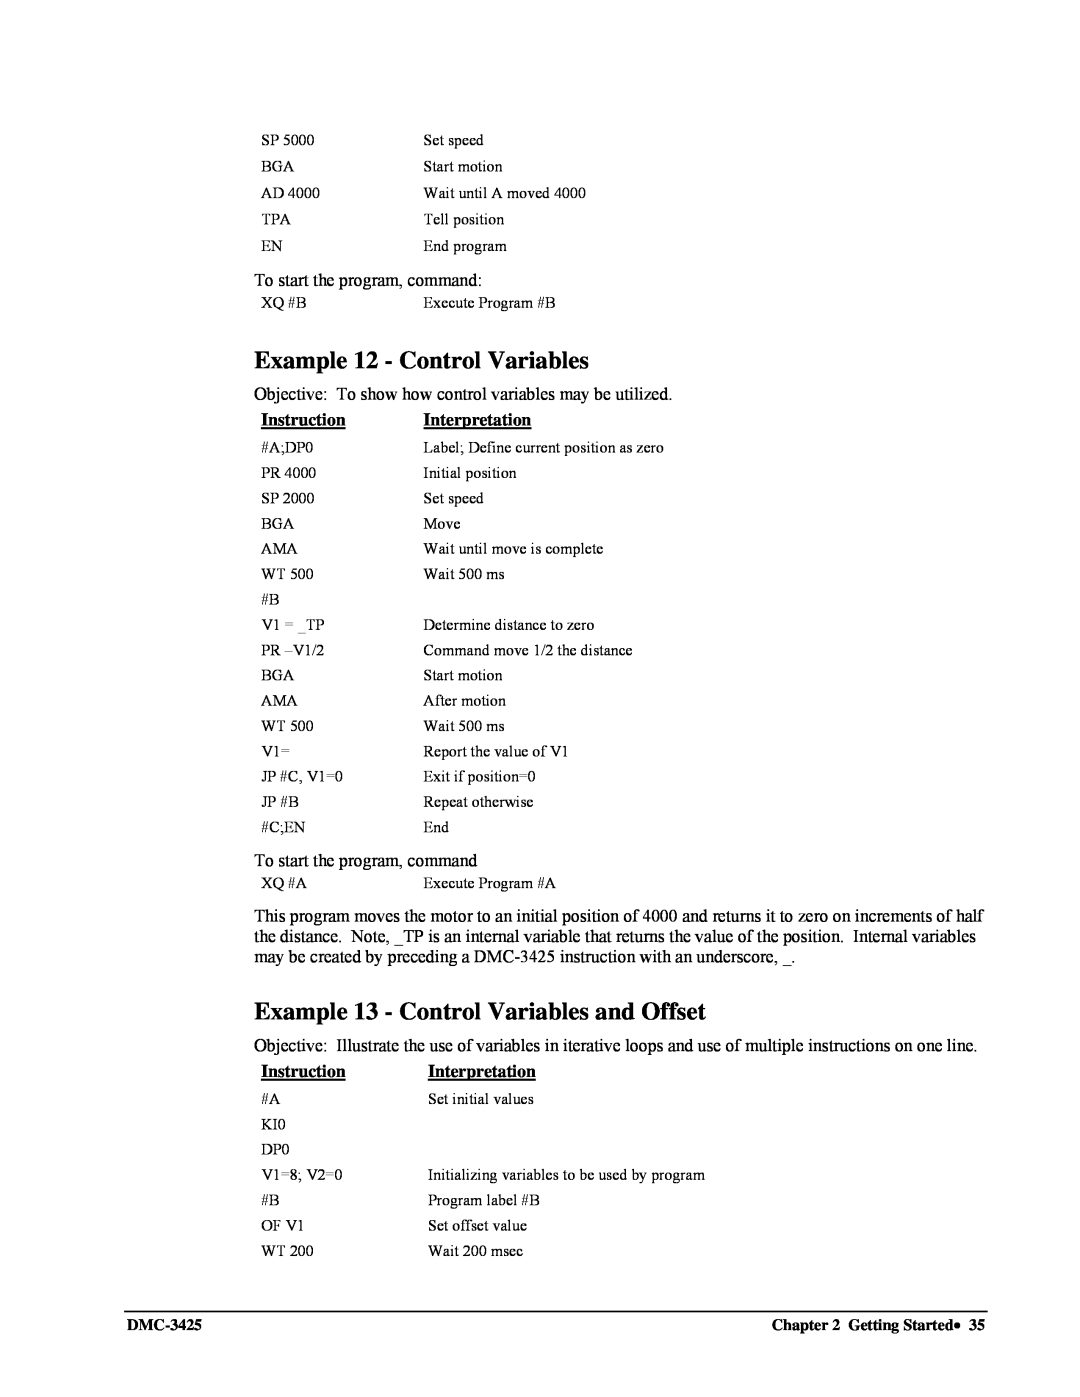 Galil DMC-3425 user manual Example 12 - Control Variables, Example 13 - Control Variables and Offset 